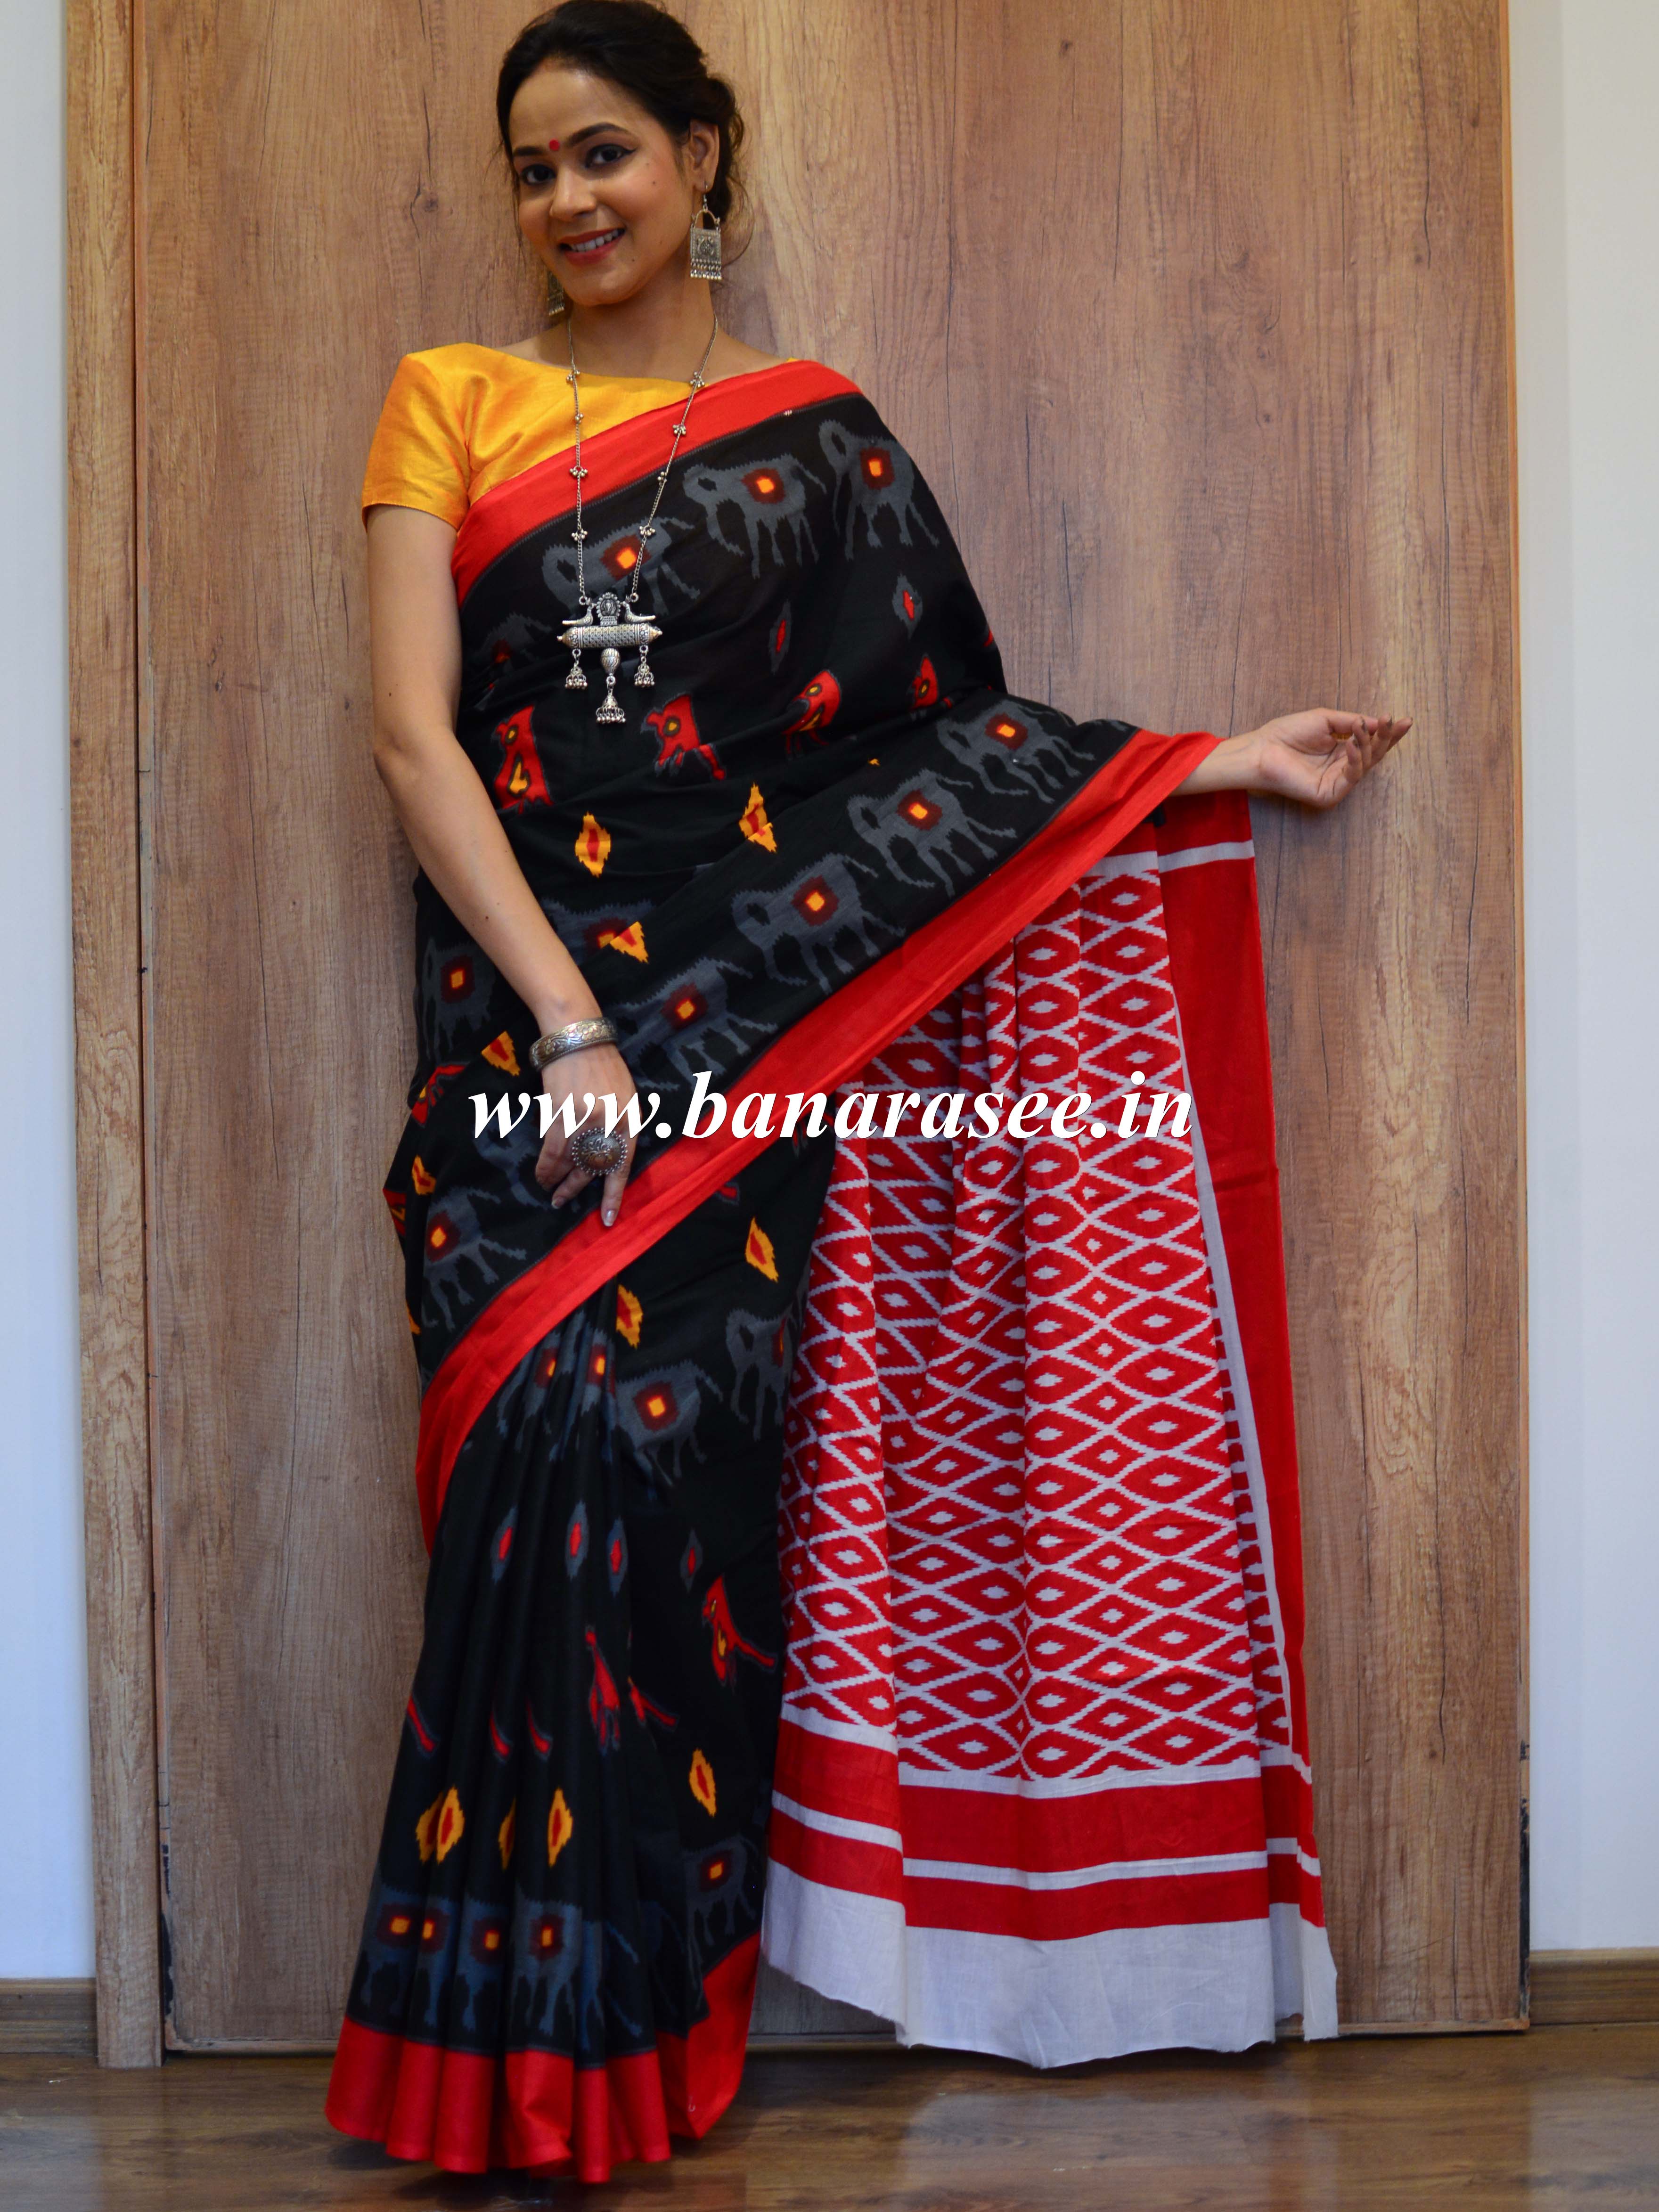 Handloom Mul Cotton Ajrakh Print Saree-Black & Red